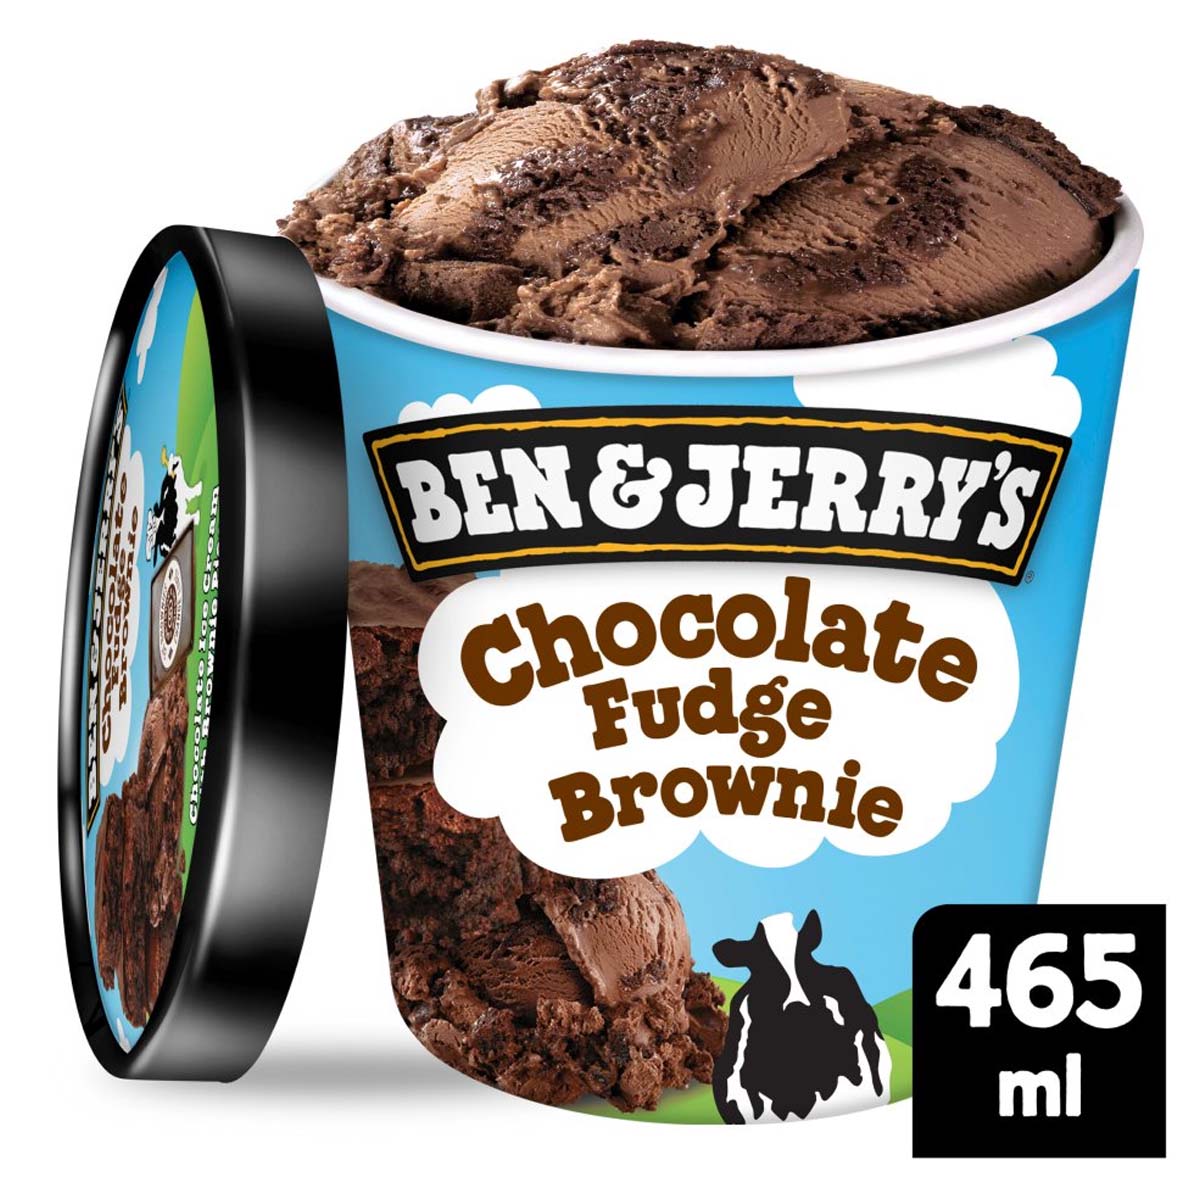 Ben & Jerry's - Chocolate Fudge Brownie Ice Cream - 465 ml - Continental Food Store